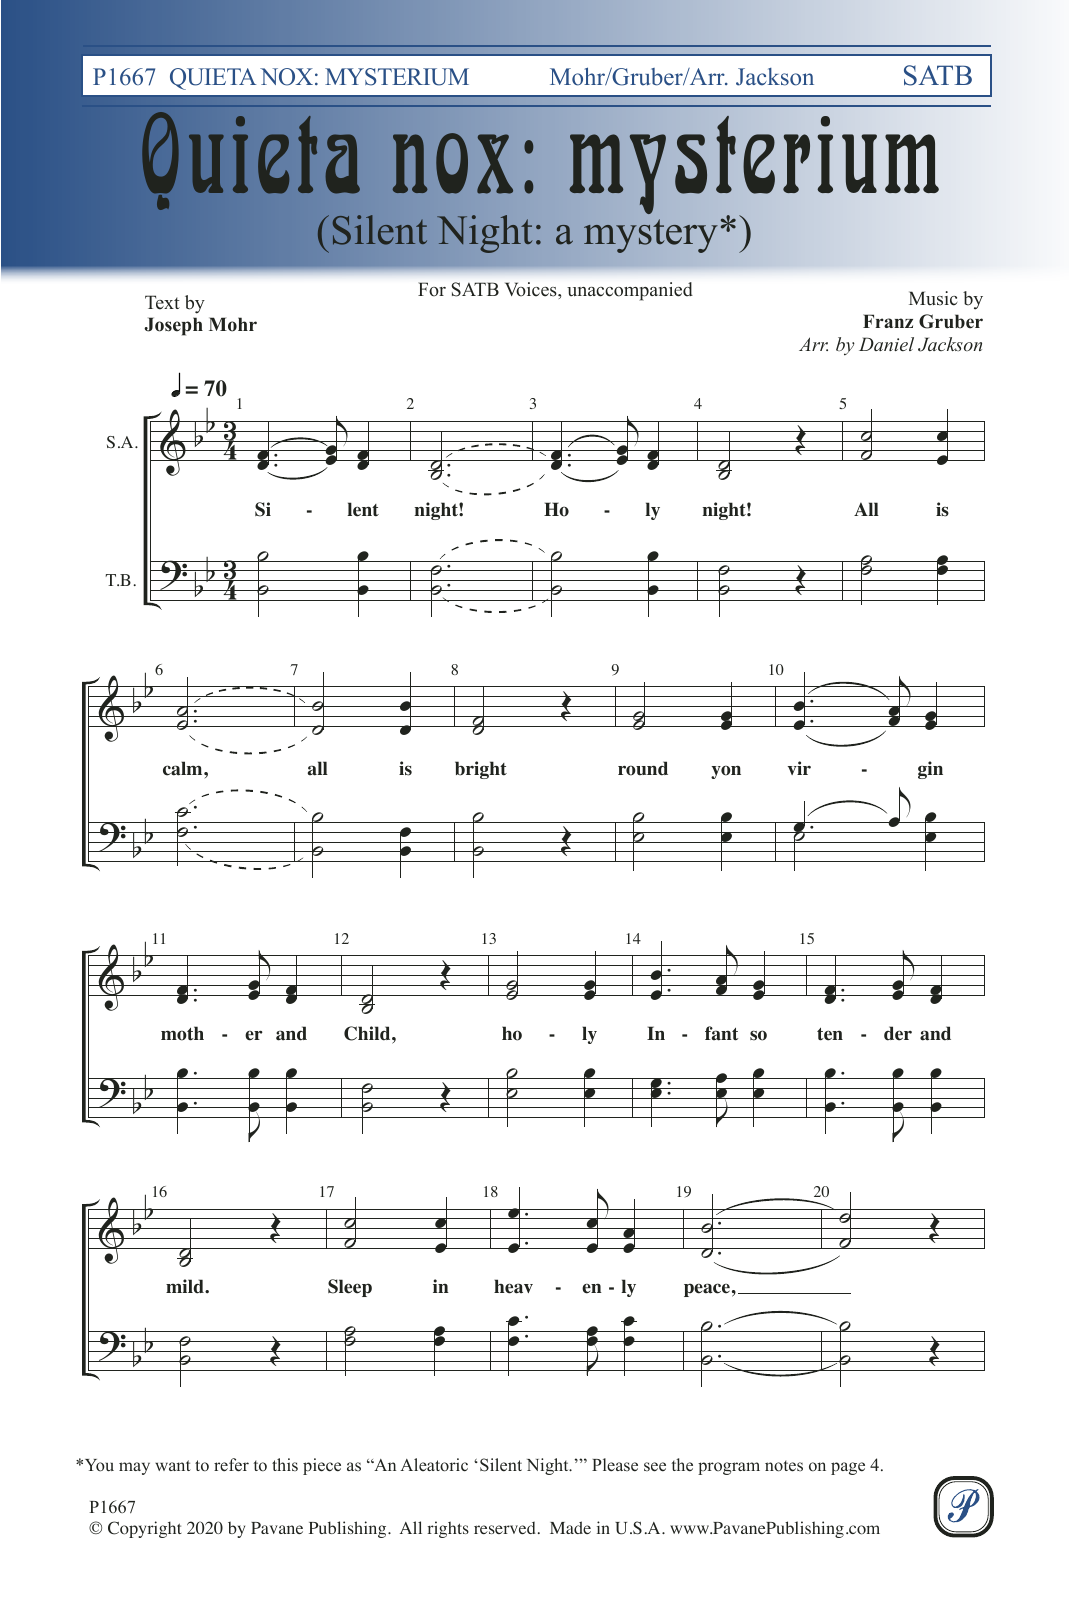 Download Daniel Jackson Quieta nox: Mysterium Sheet Music and learn how to play SATB Choir PDF digital score in minutes